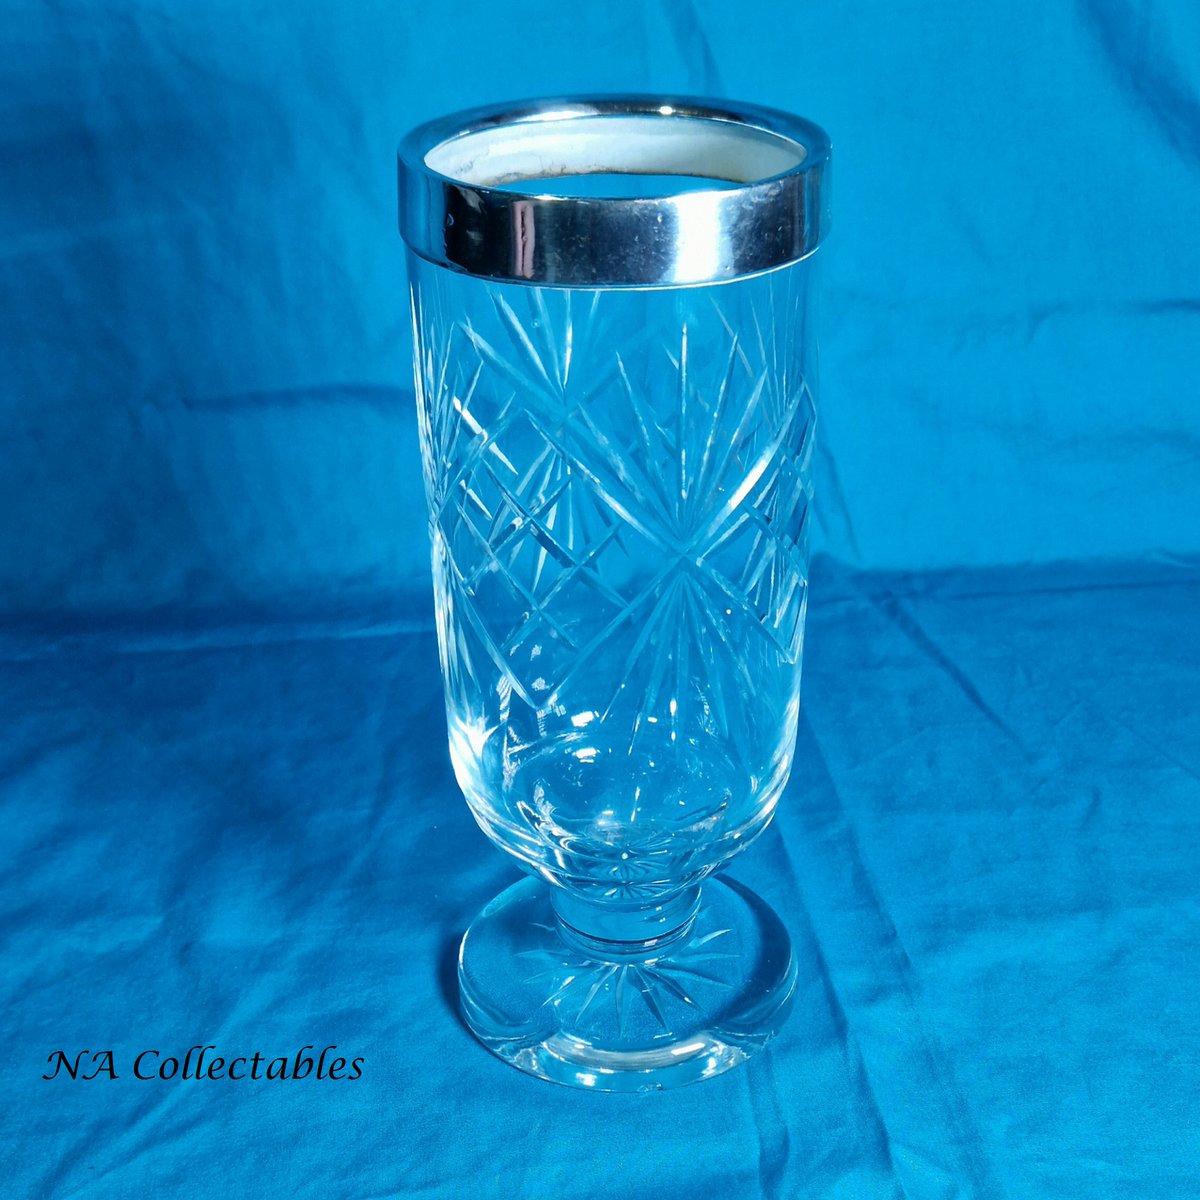 Like the bowl this 1950's vase has a metal rim but with lead crystal glass. 
etsy.me/43m0LbL
@everrotating #vintageshowandsell #reusevintage #vintageglass #cutcrystal #vintagestyle #vintagehome #lovevintage #buyvintage #retro #retroglass #glassware